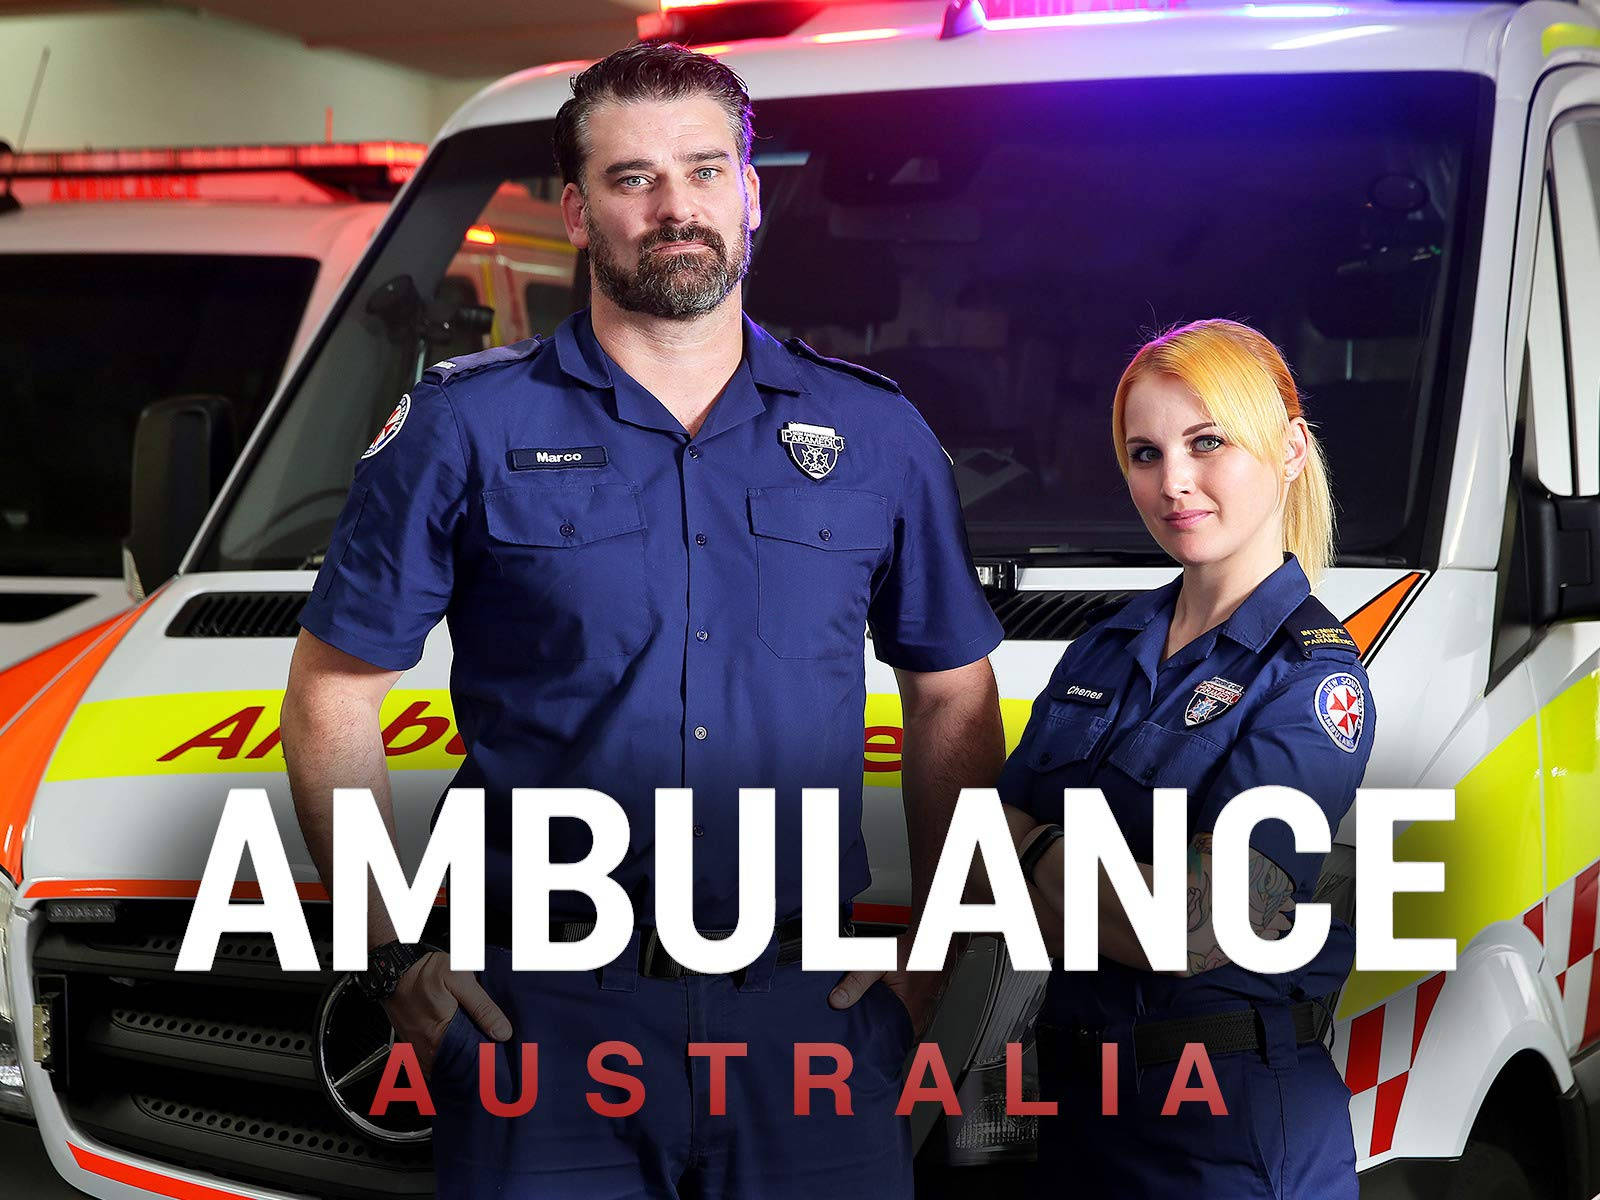 Australiaparamedic Ambulance Would Be Translated To Spanish As 